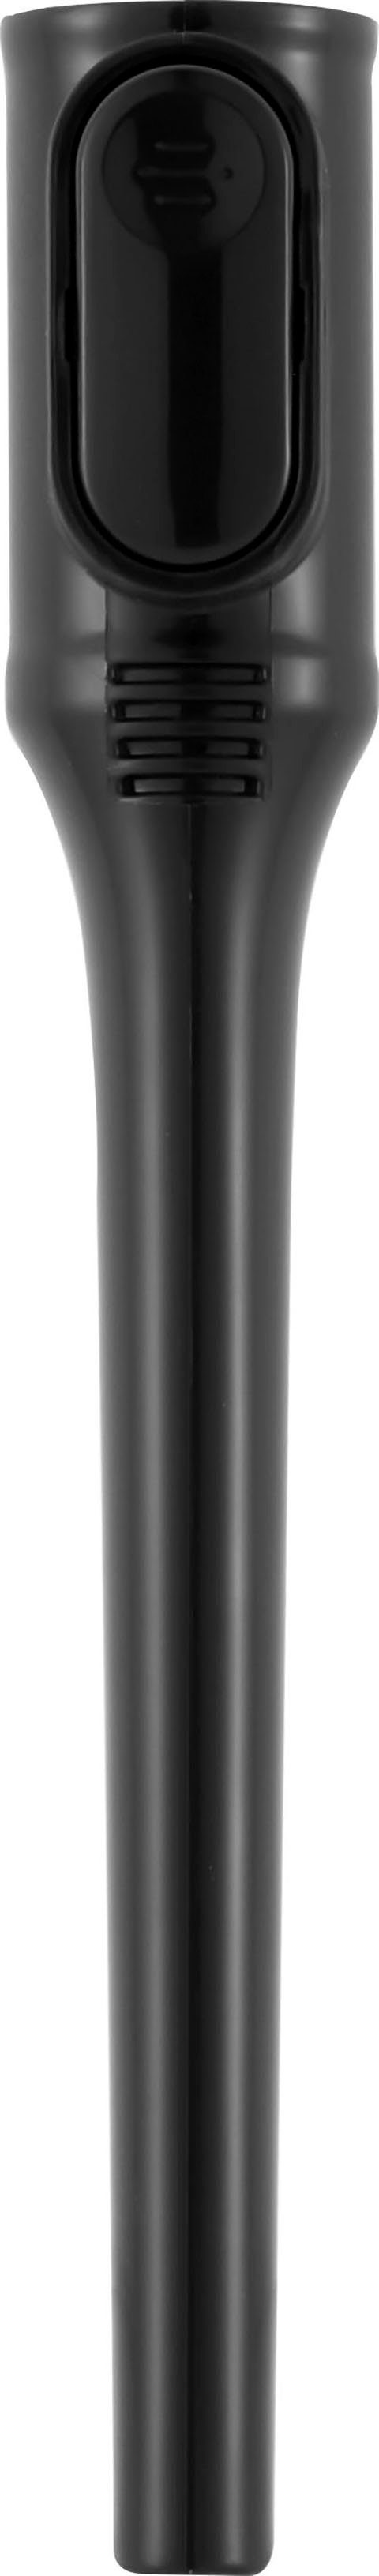 Midea Akku-Bodenstaubsauger L 10, 250 W, beutellos